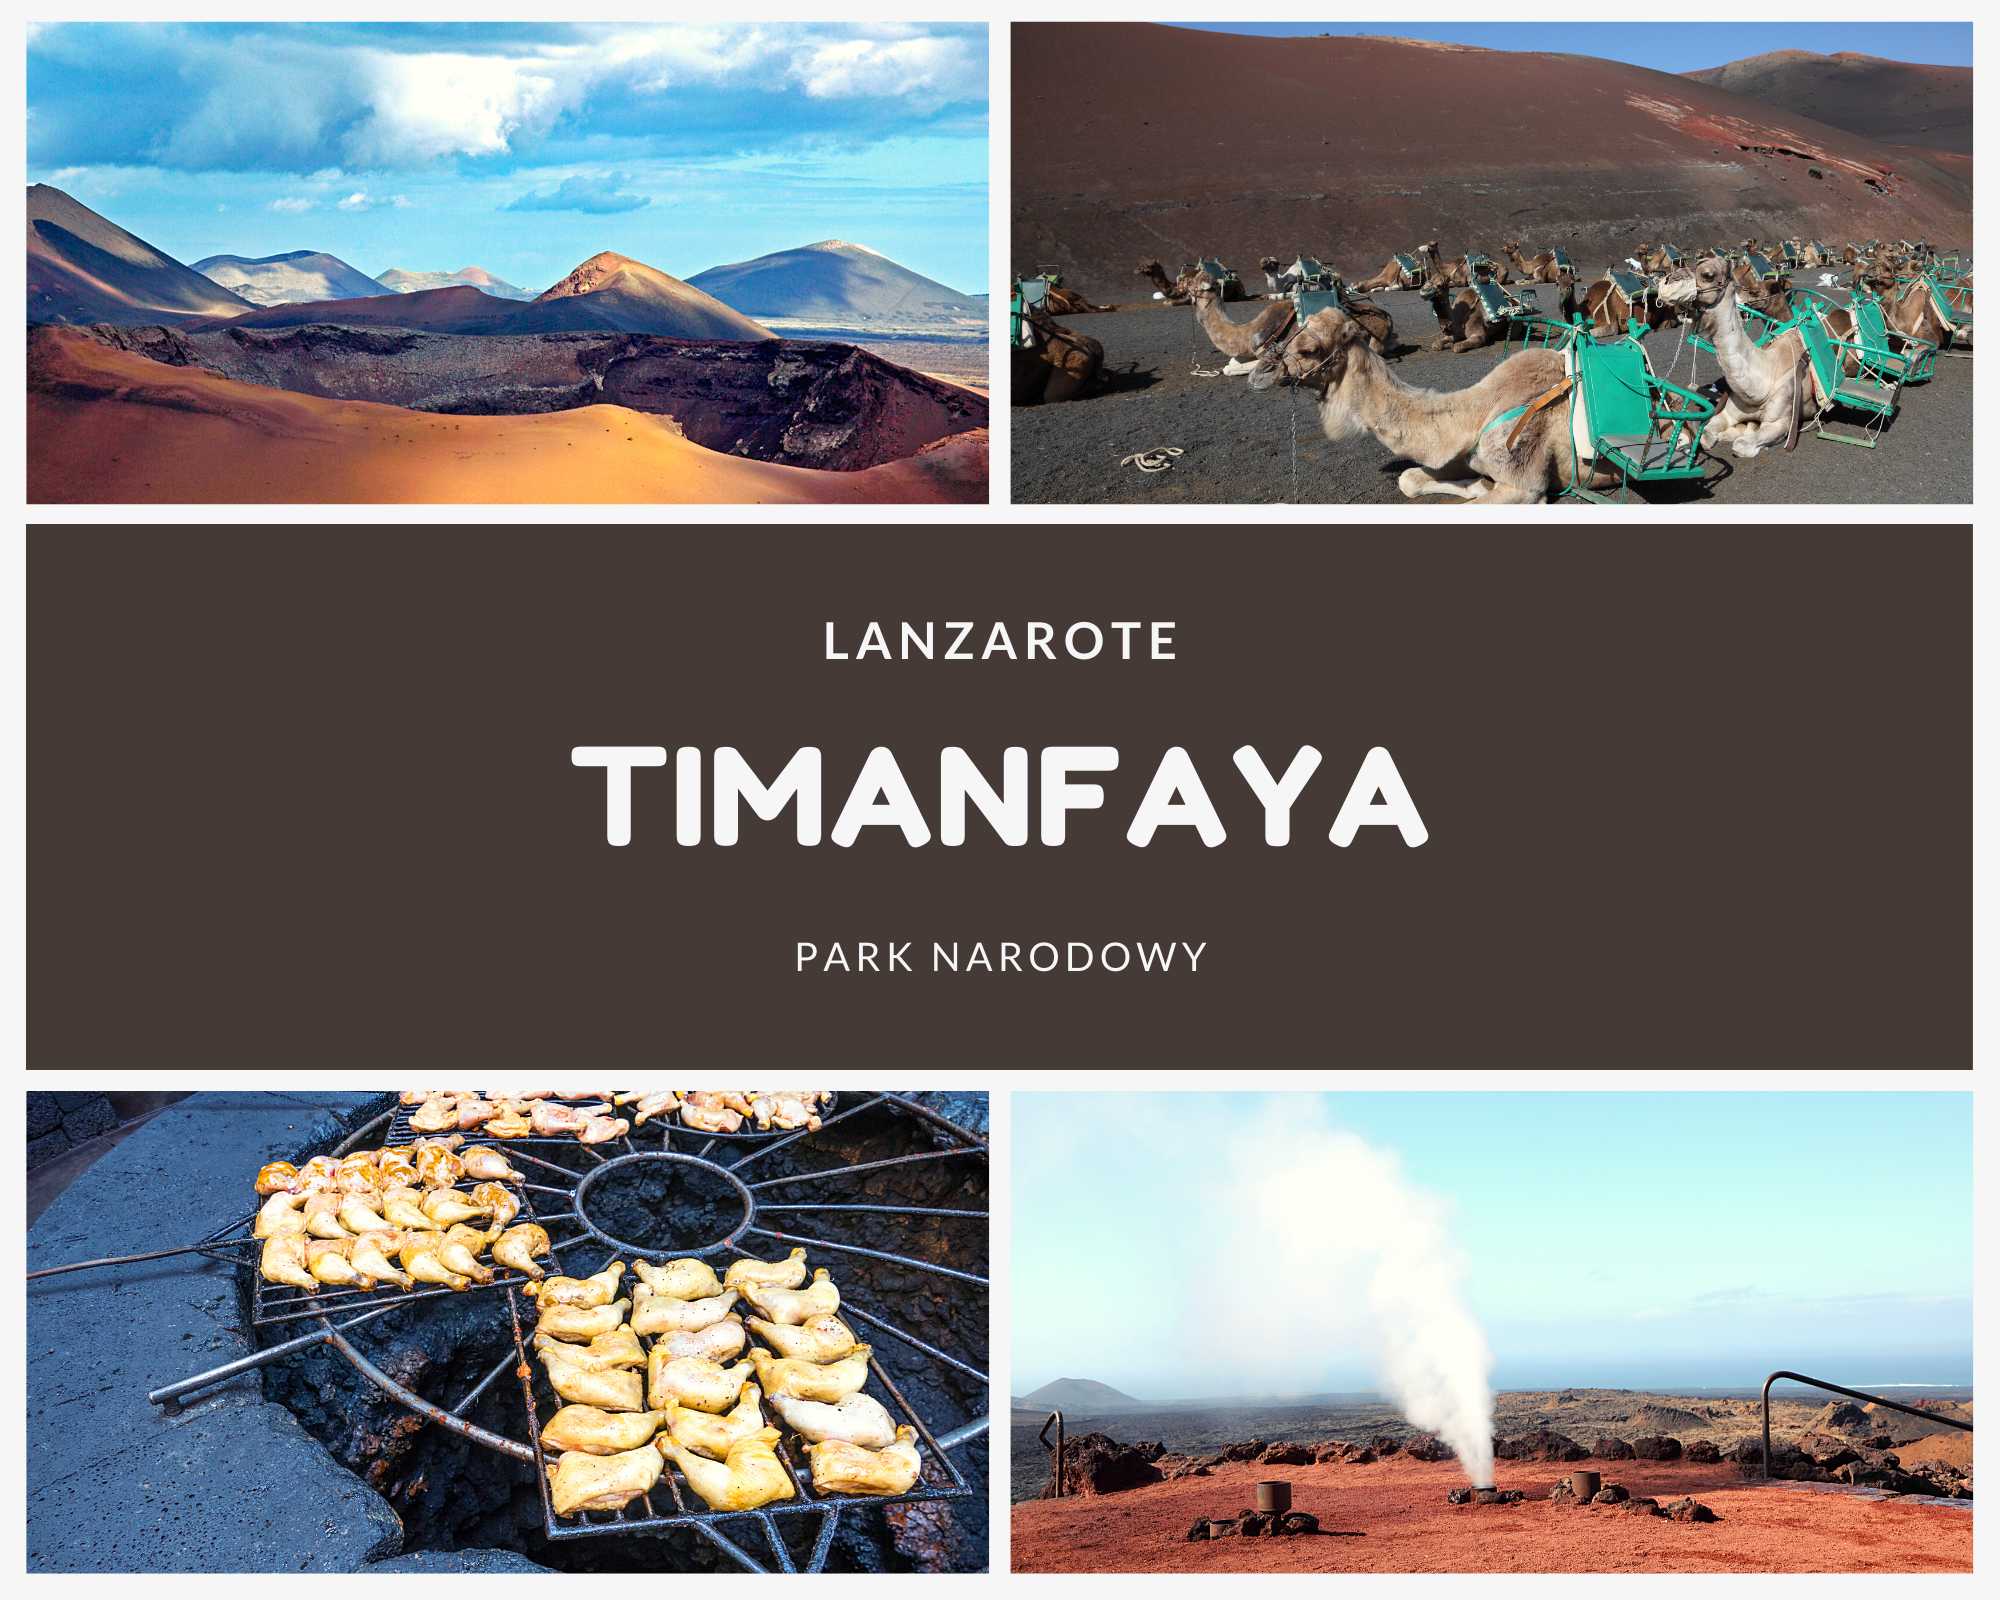 Timanfaya - Lanzarote atrakcje